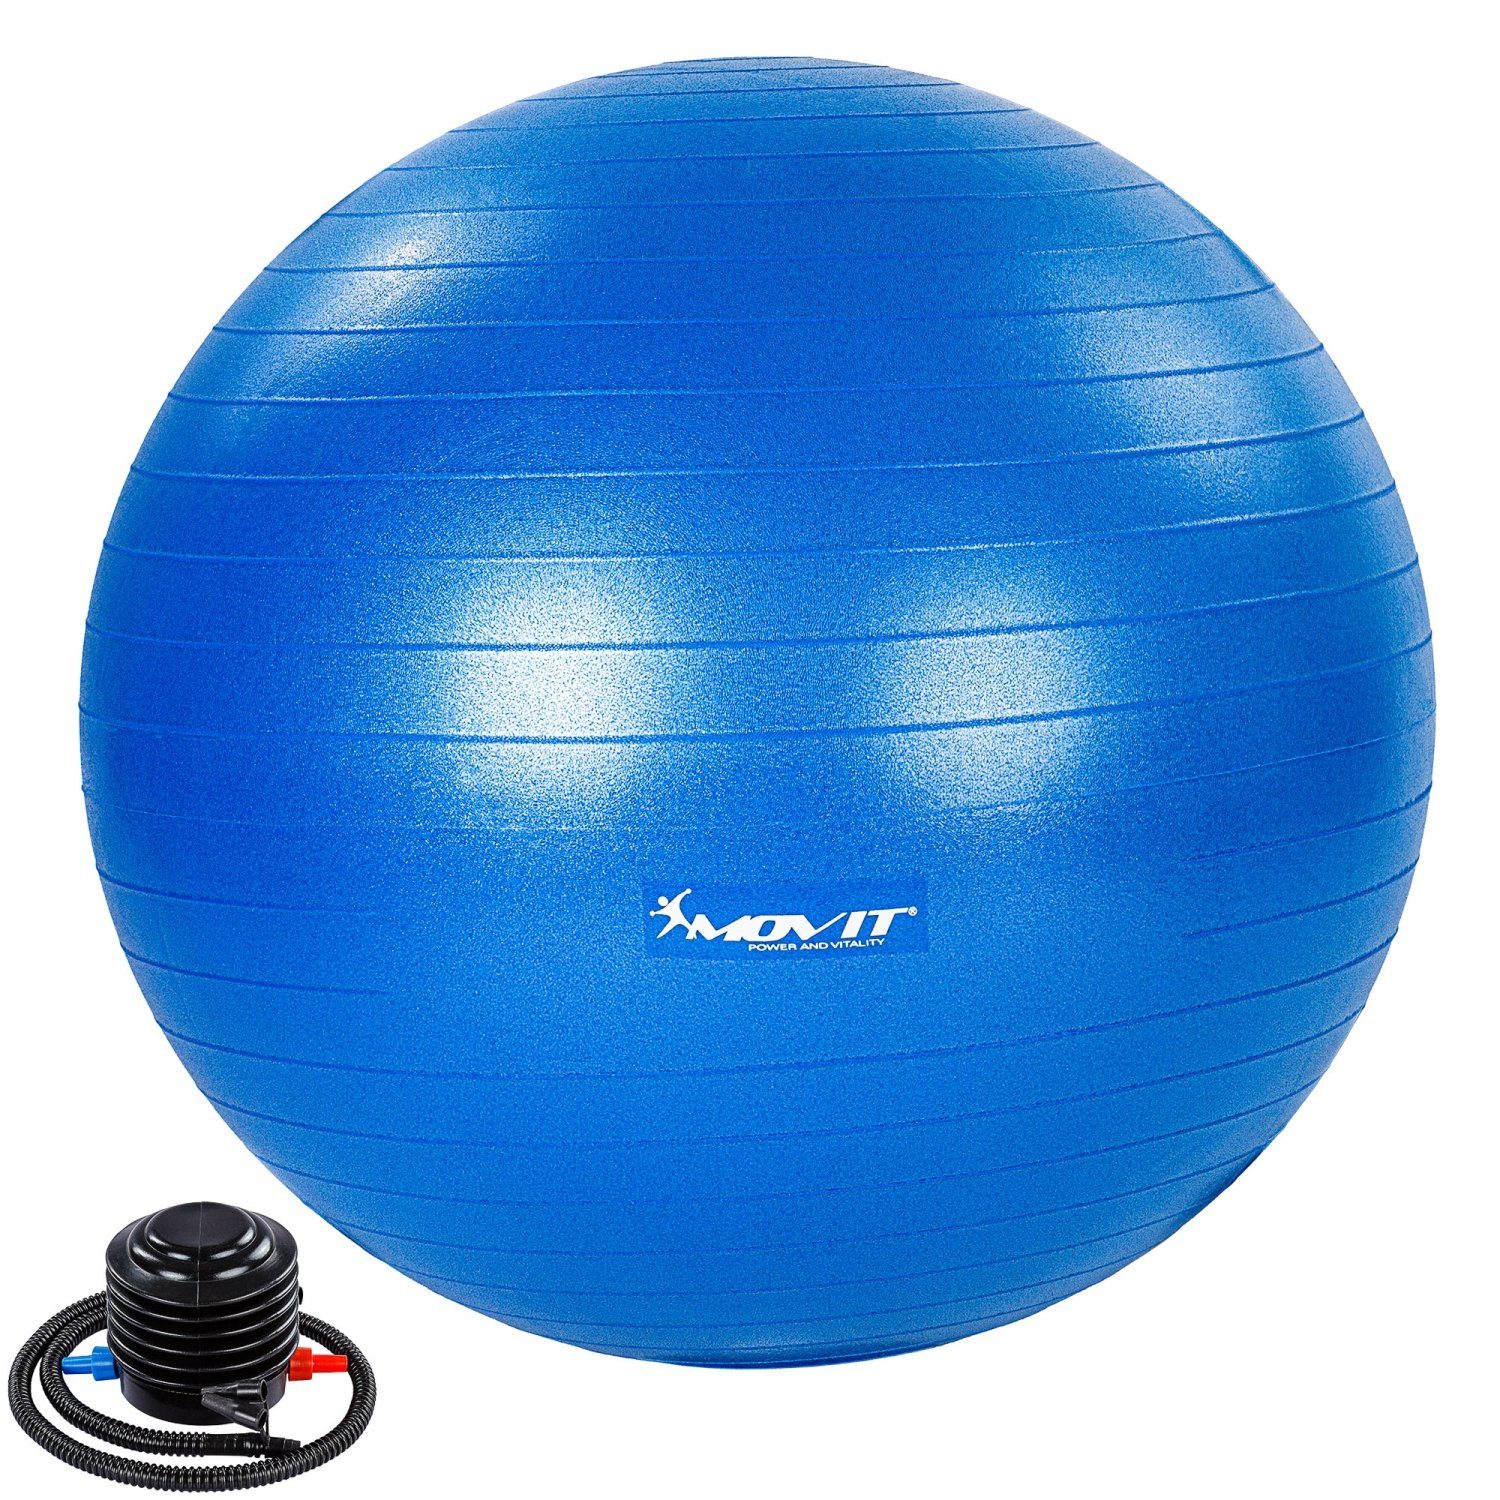 Inflator【DE】 65/75/85cm Gymnastikball Fitnessball Sitzball Balanceball Yogaball 